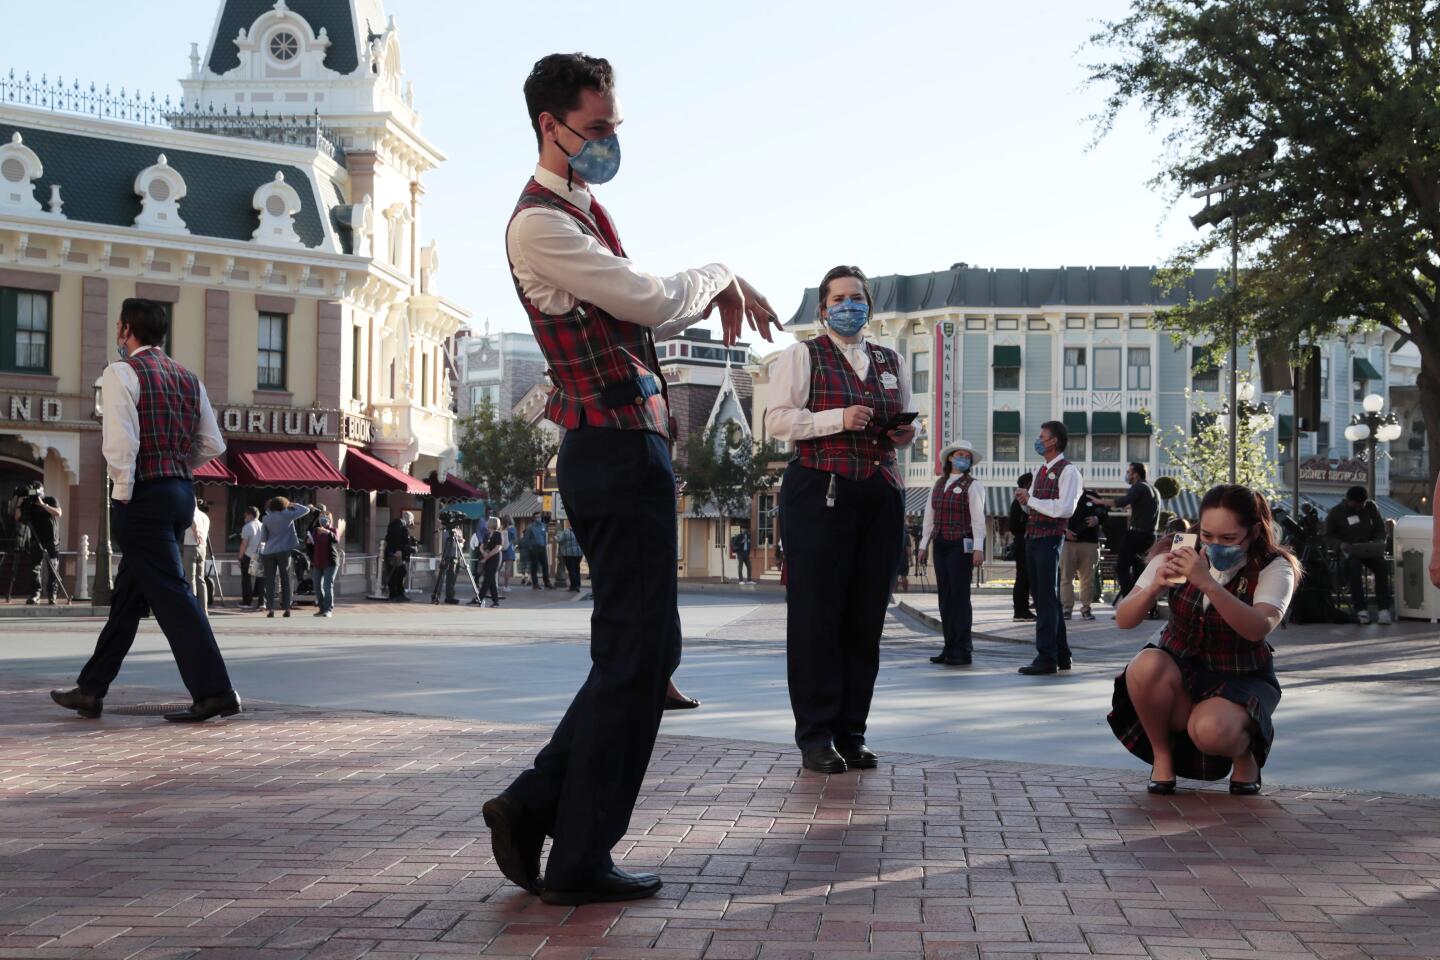 Disneyland employees take pictures before reopening